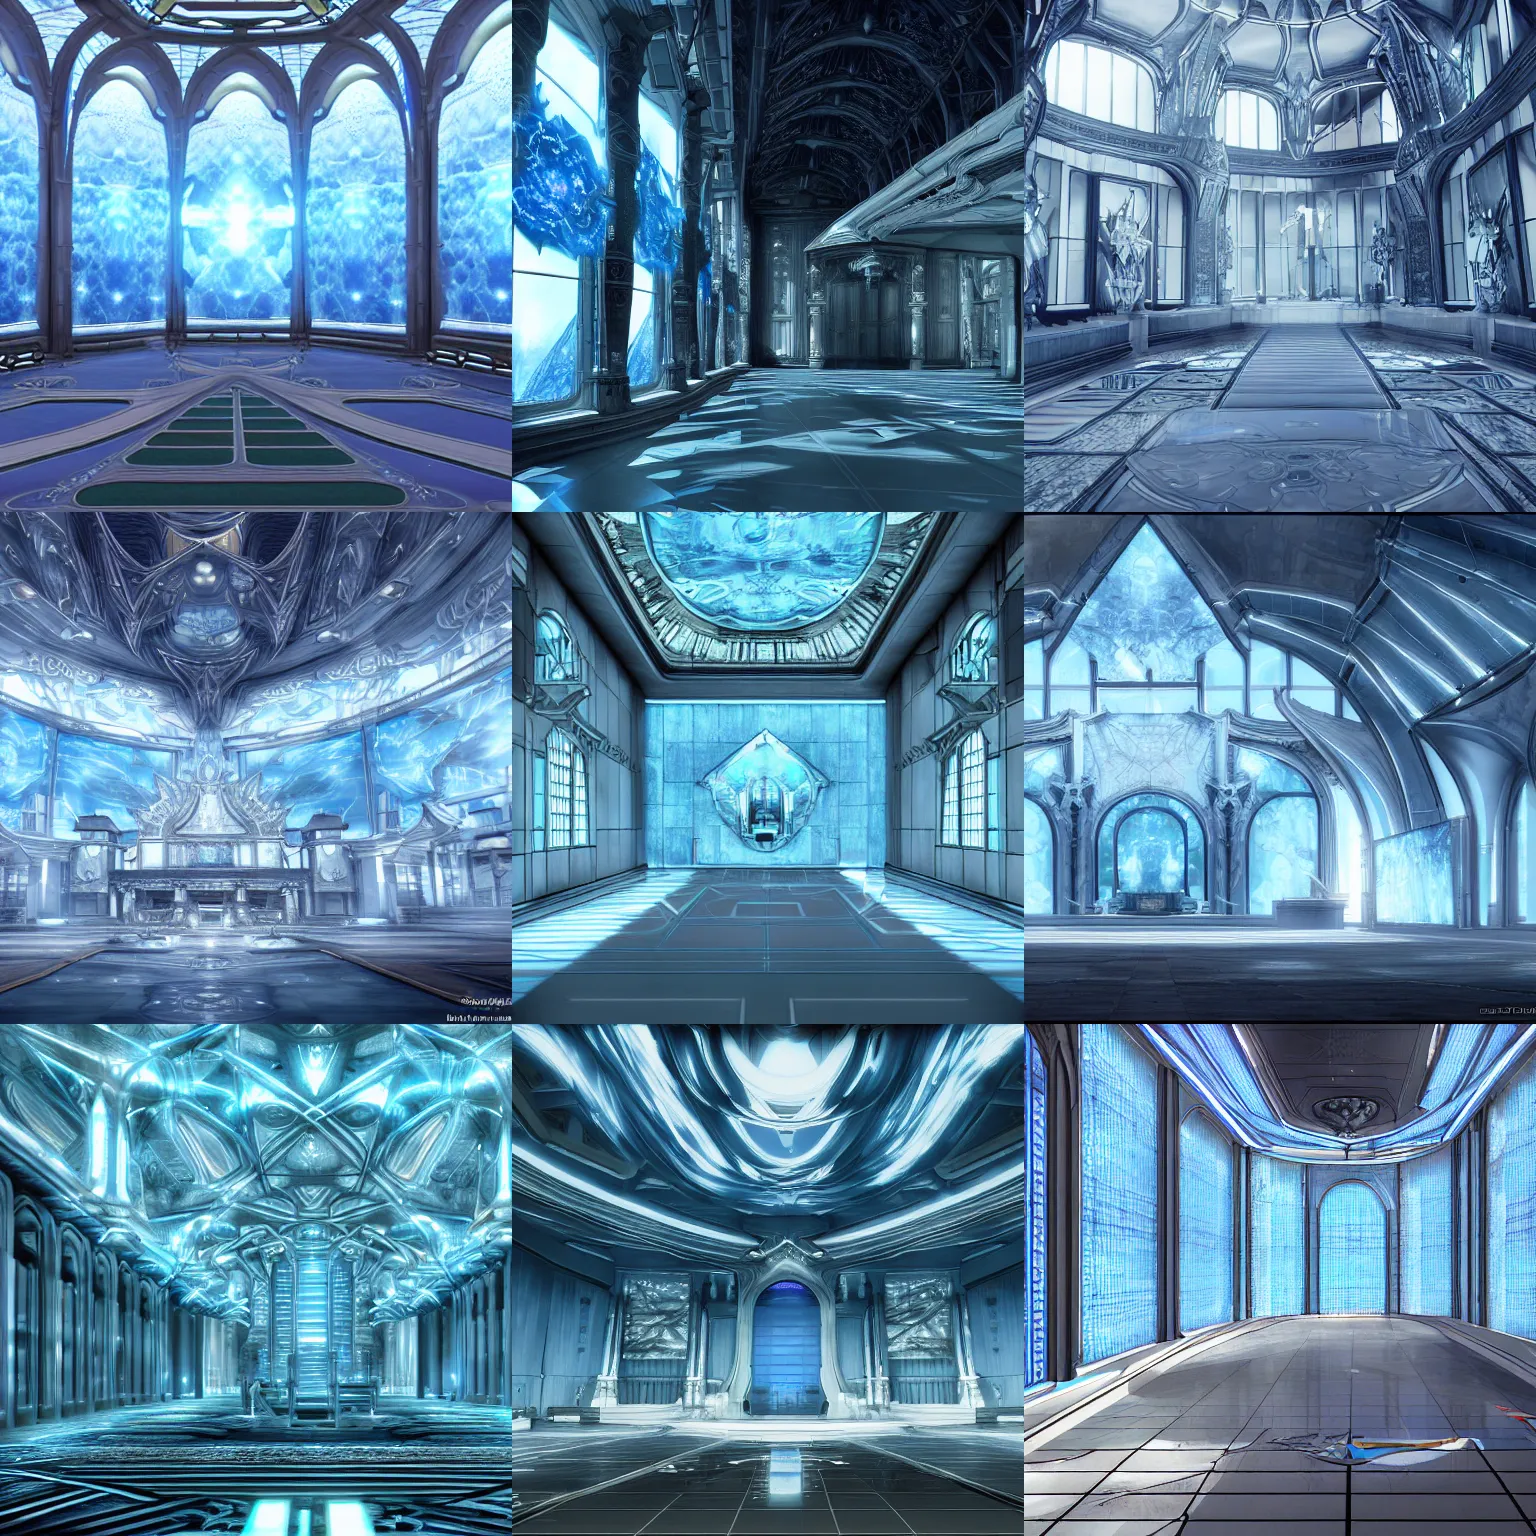 Final Fantasy XIII - Windows